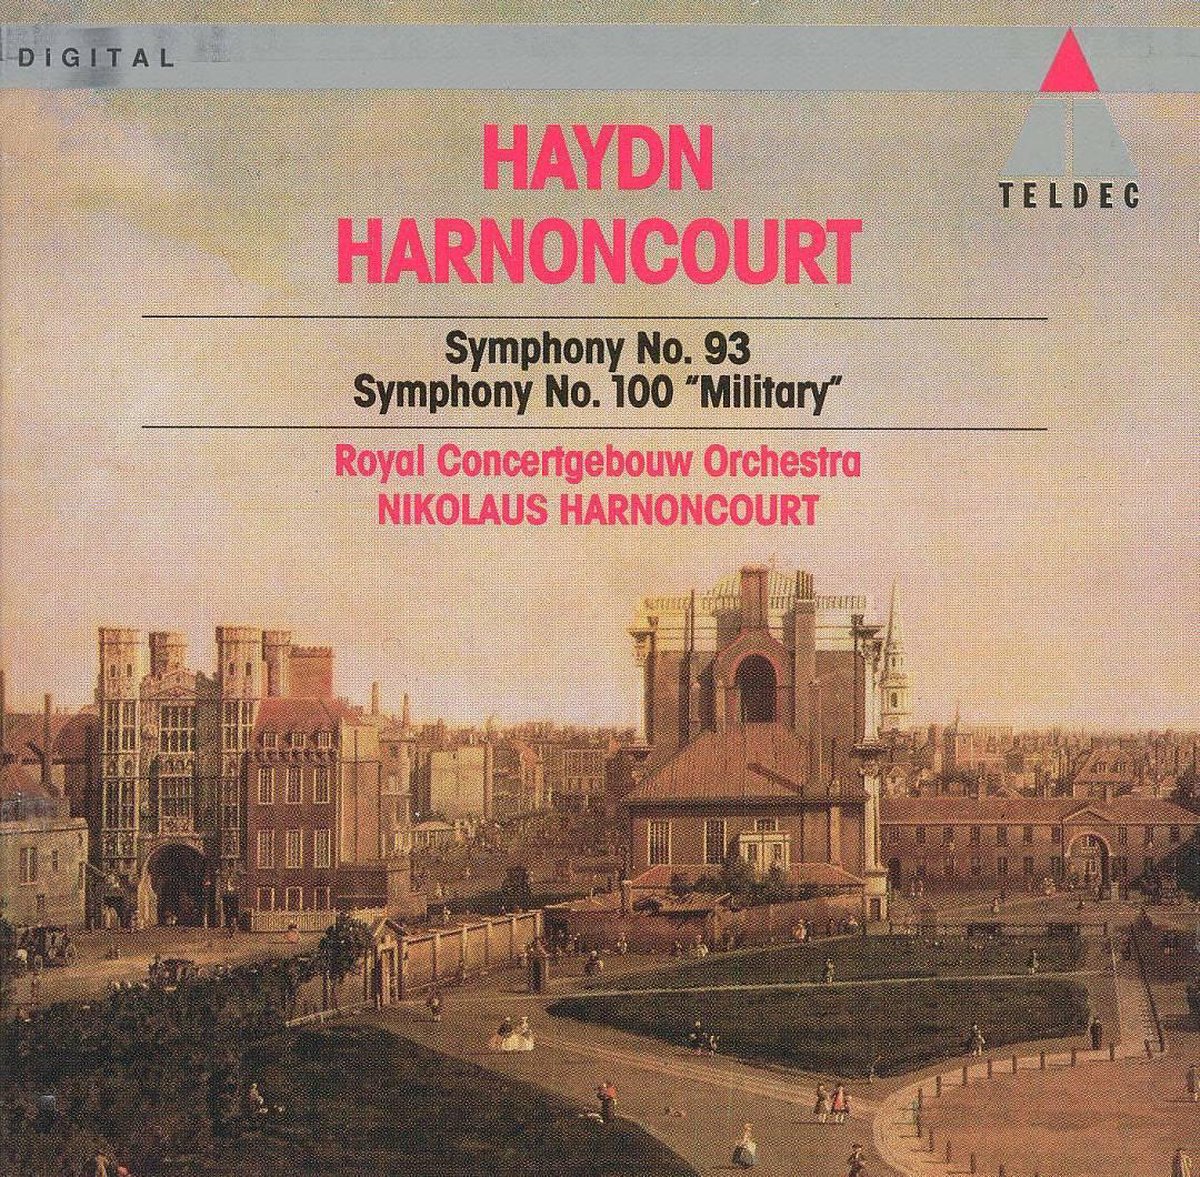 Haydn: Symphonies 93, 100 & 68 / Harnoncourt, Concertgebouw - Nikolaus Harnoncourt